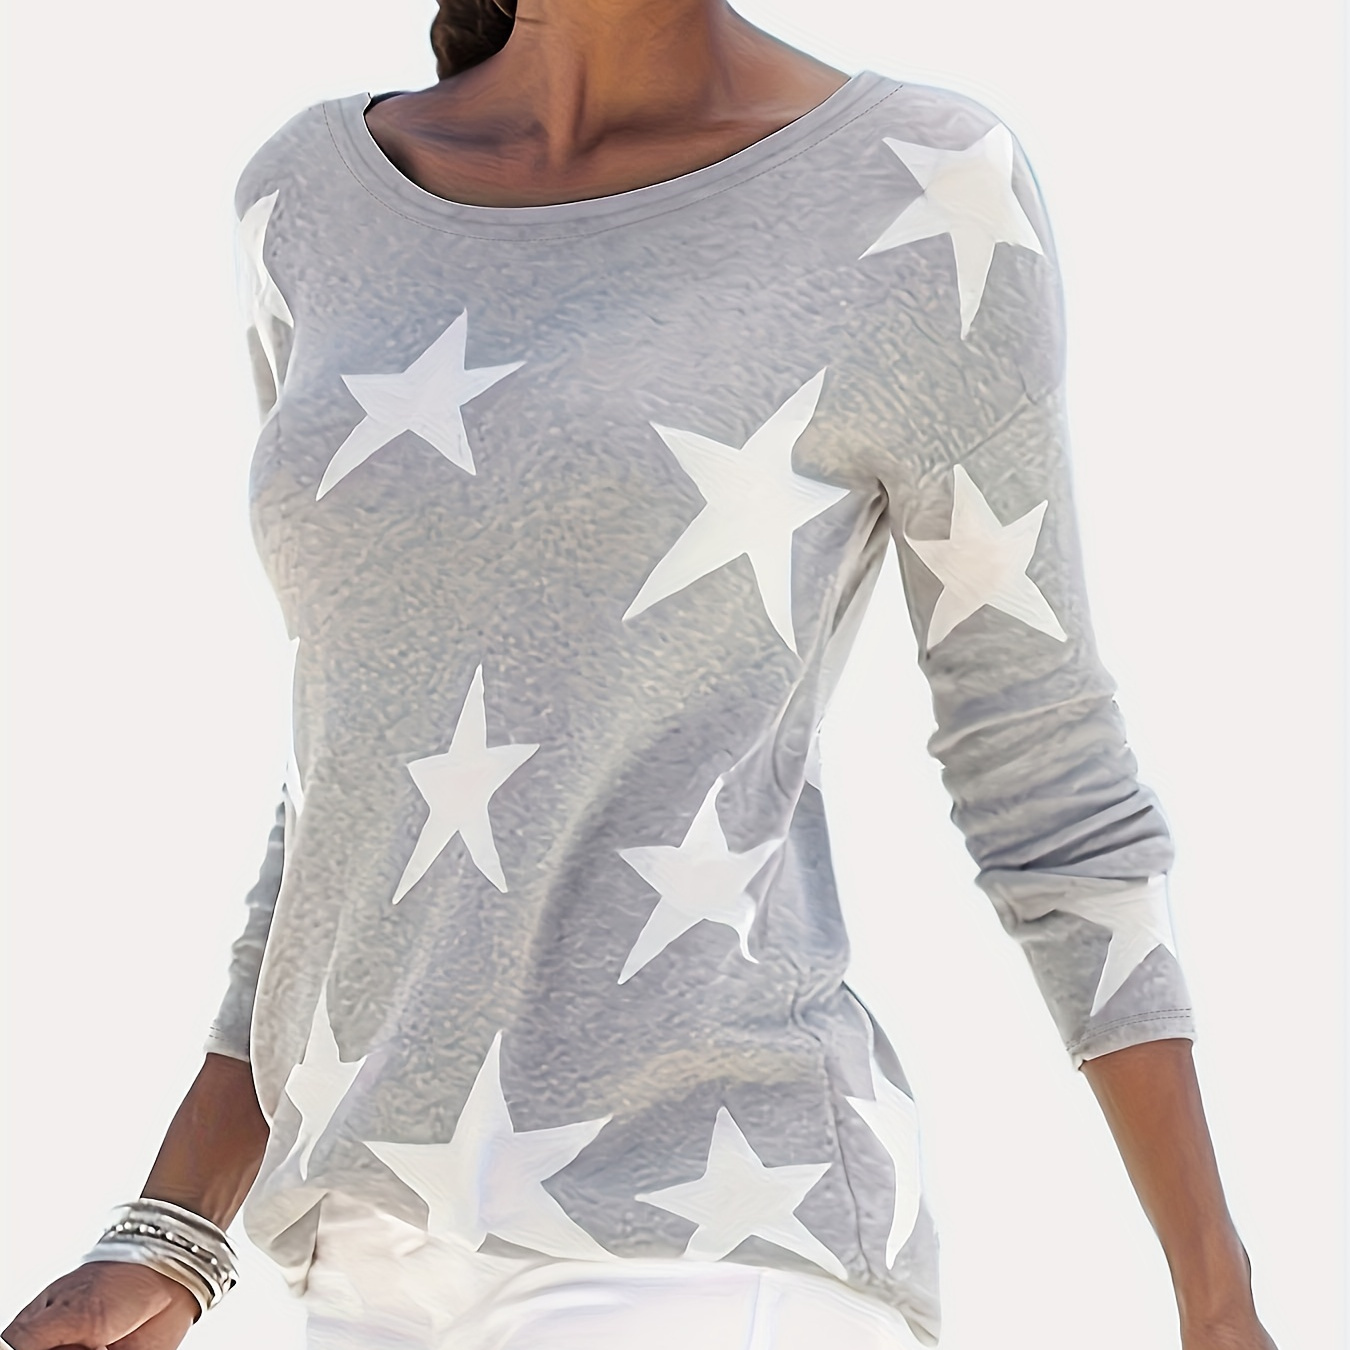 

Stars Print T-shirt, Casual Crew Neck Long Sleeve T-shirt, Women's Clothing